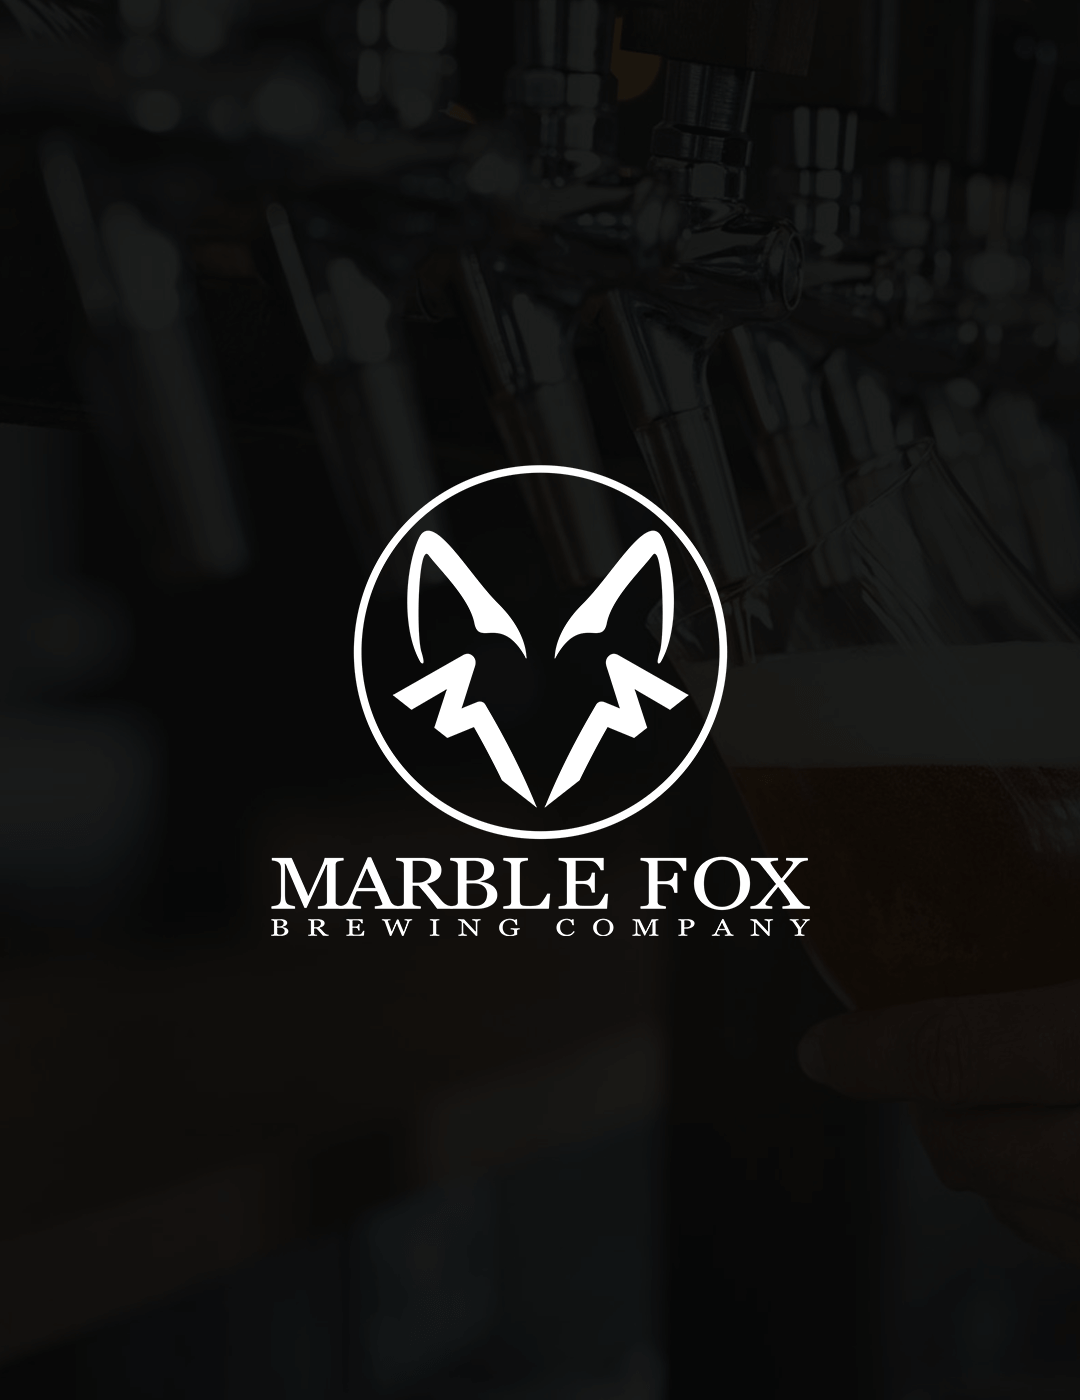 Marble Fox Brewing Company